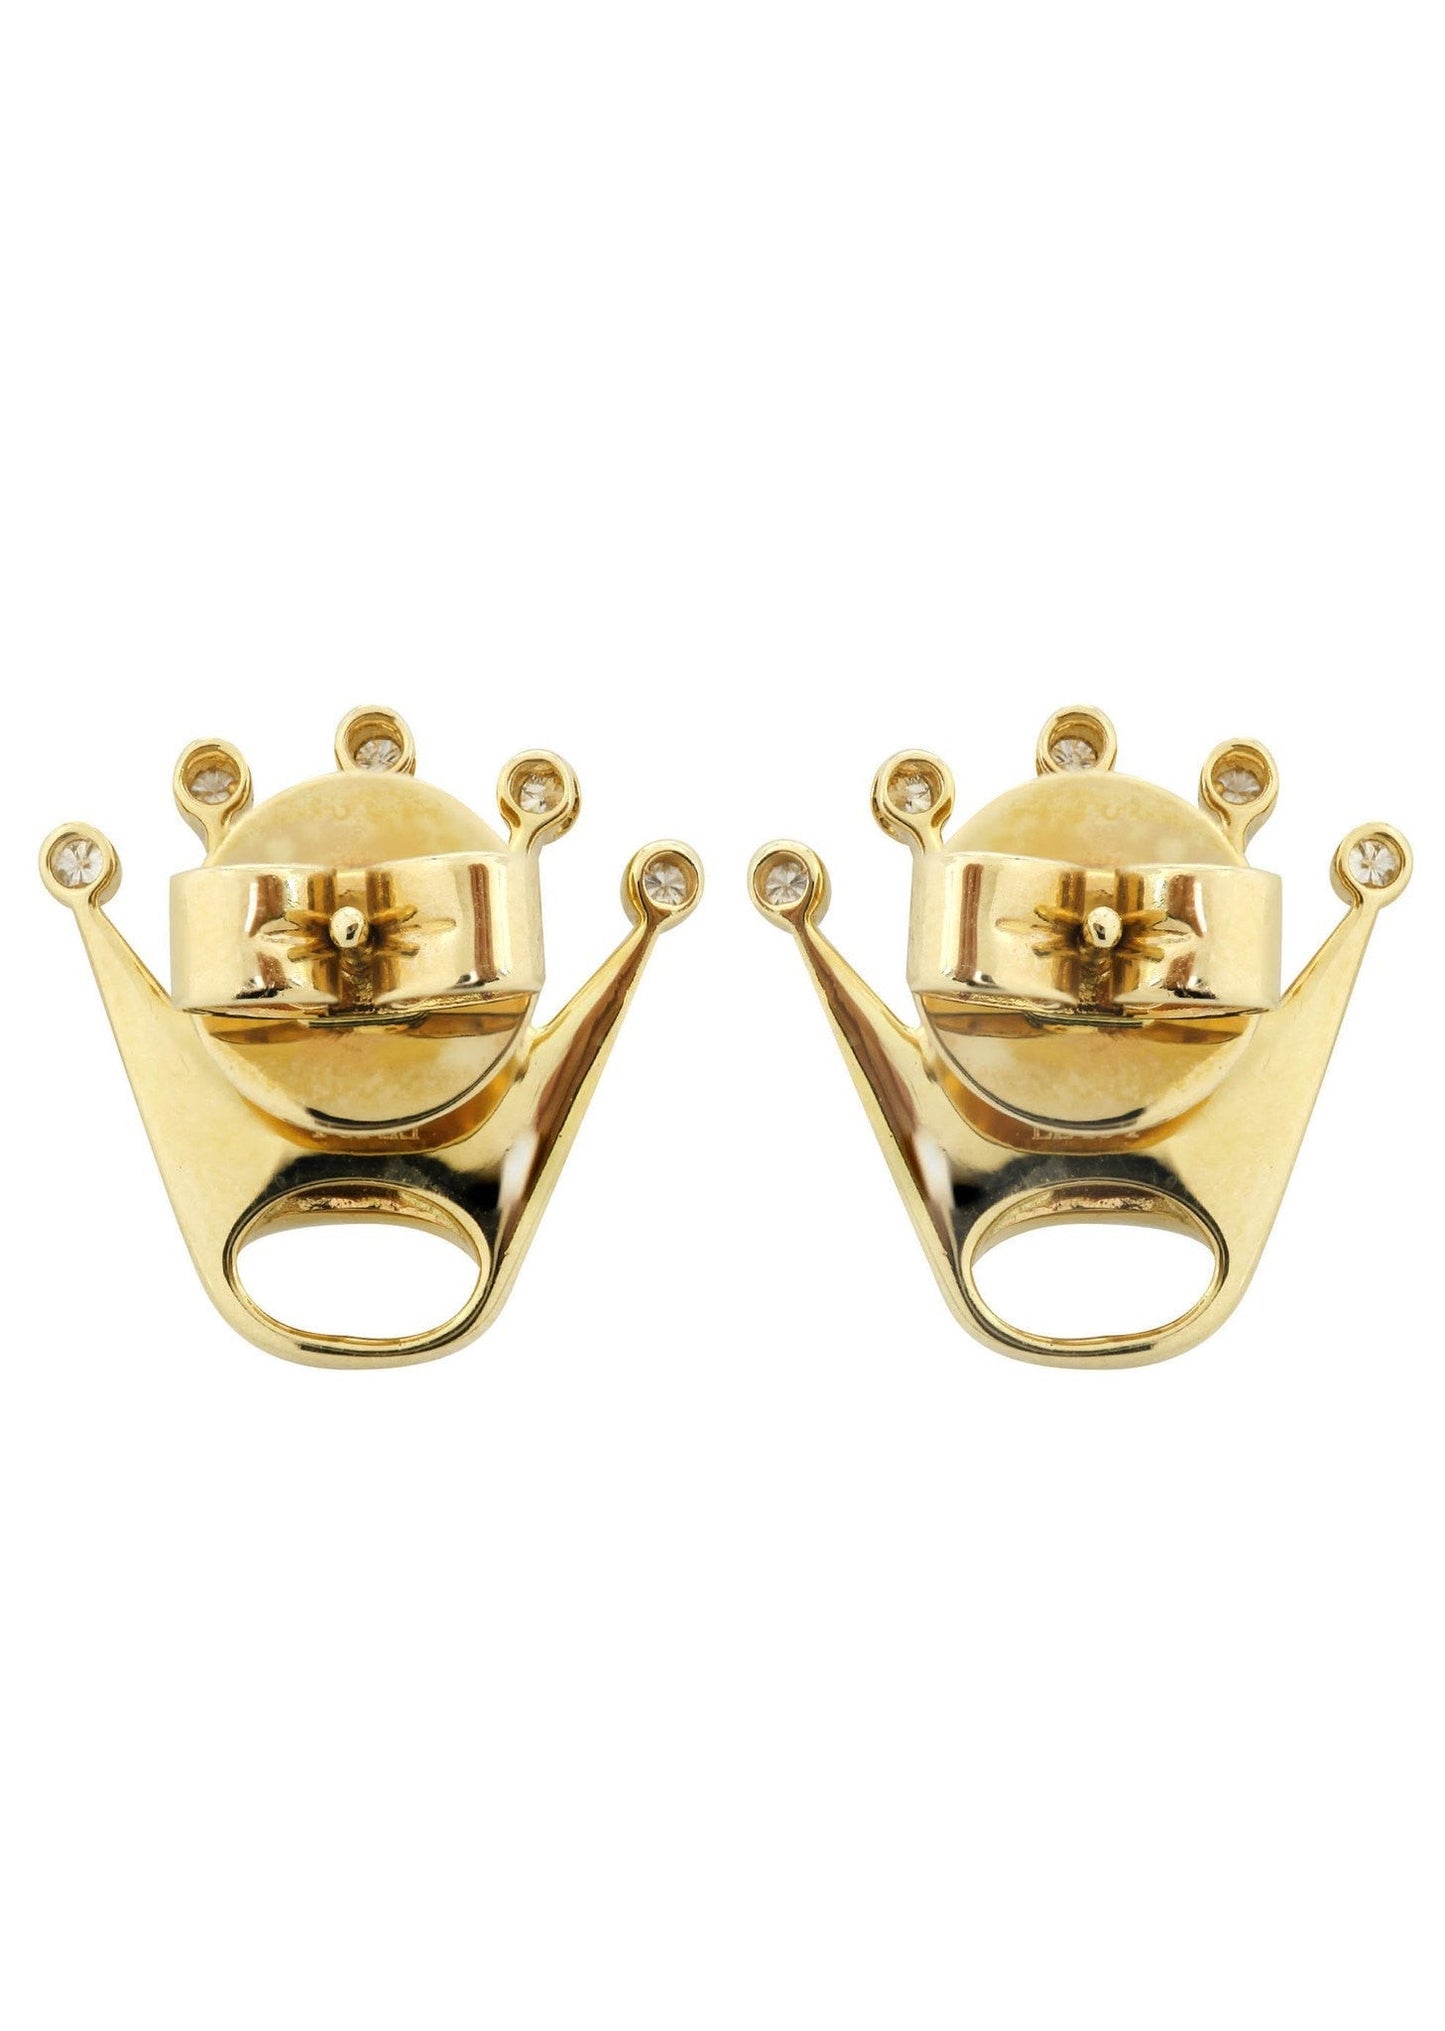 Diamond Earrings For Men |  14K Yellow Gold  | 0.58 Carats